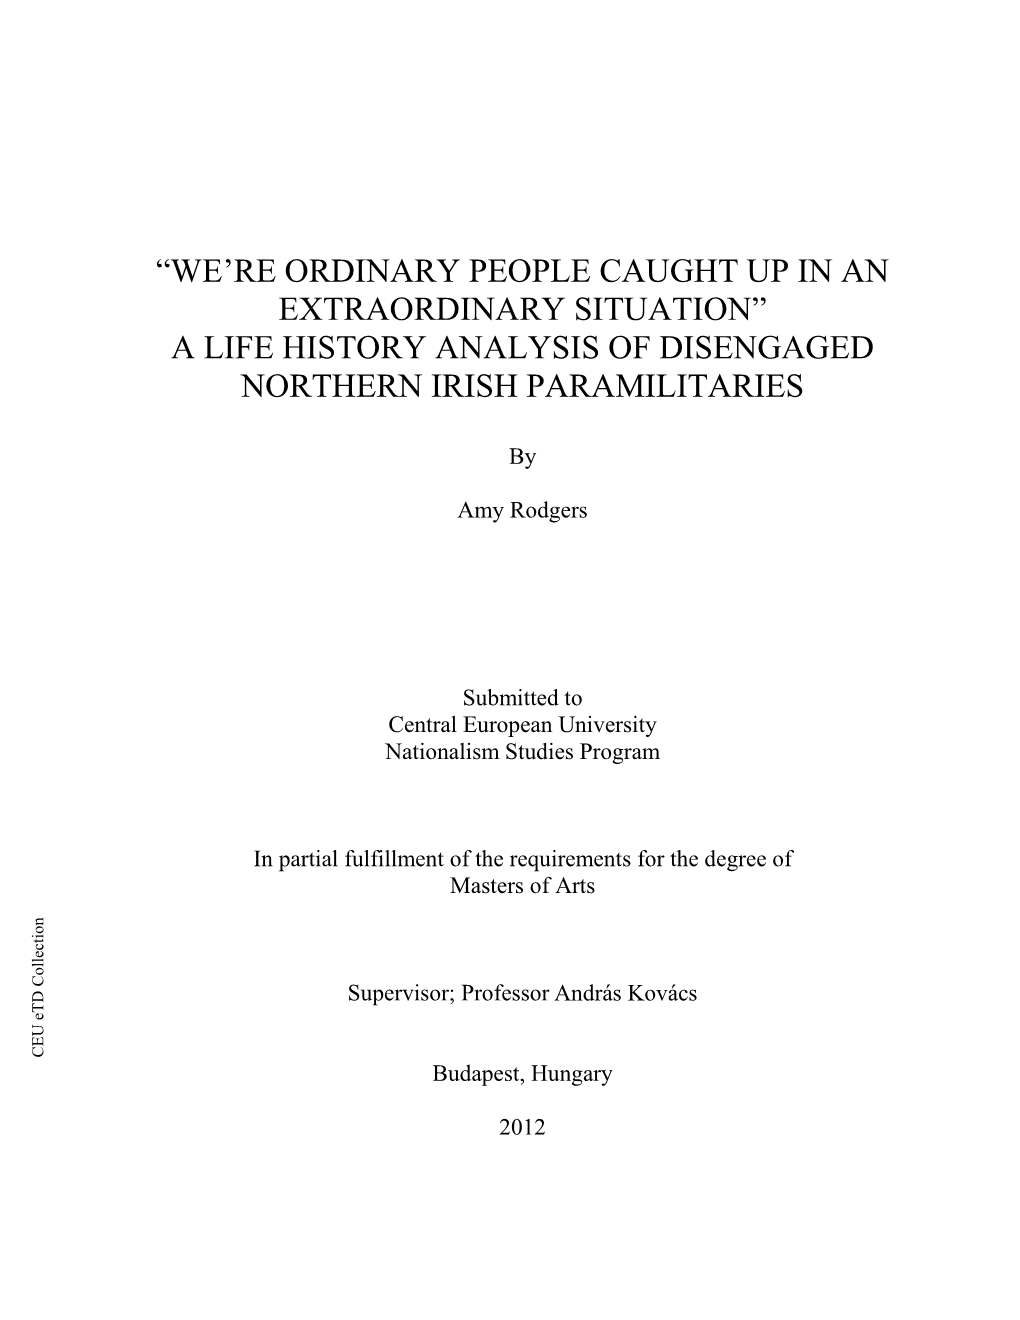 A Life History Analysis of Disengaged Northern Irish